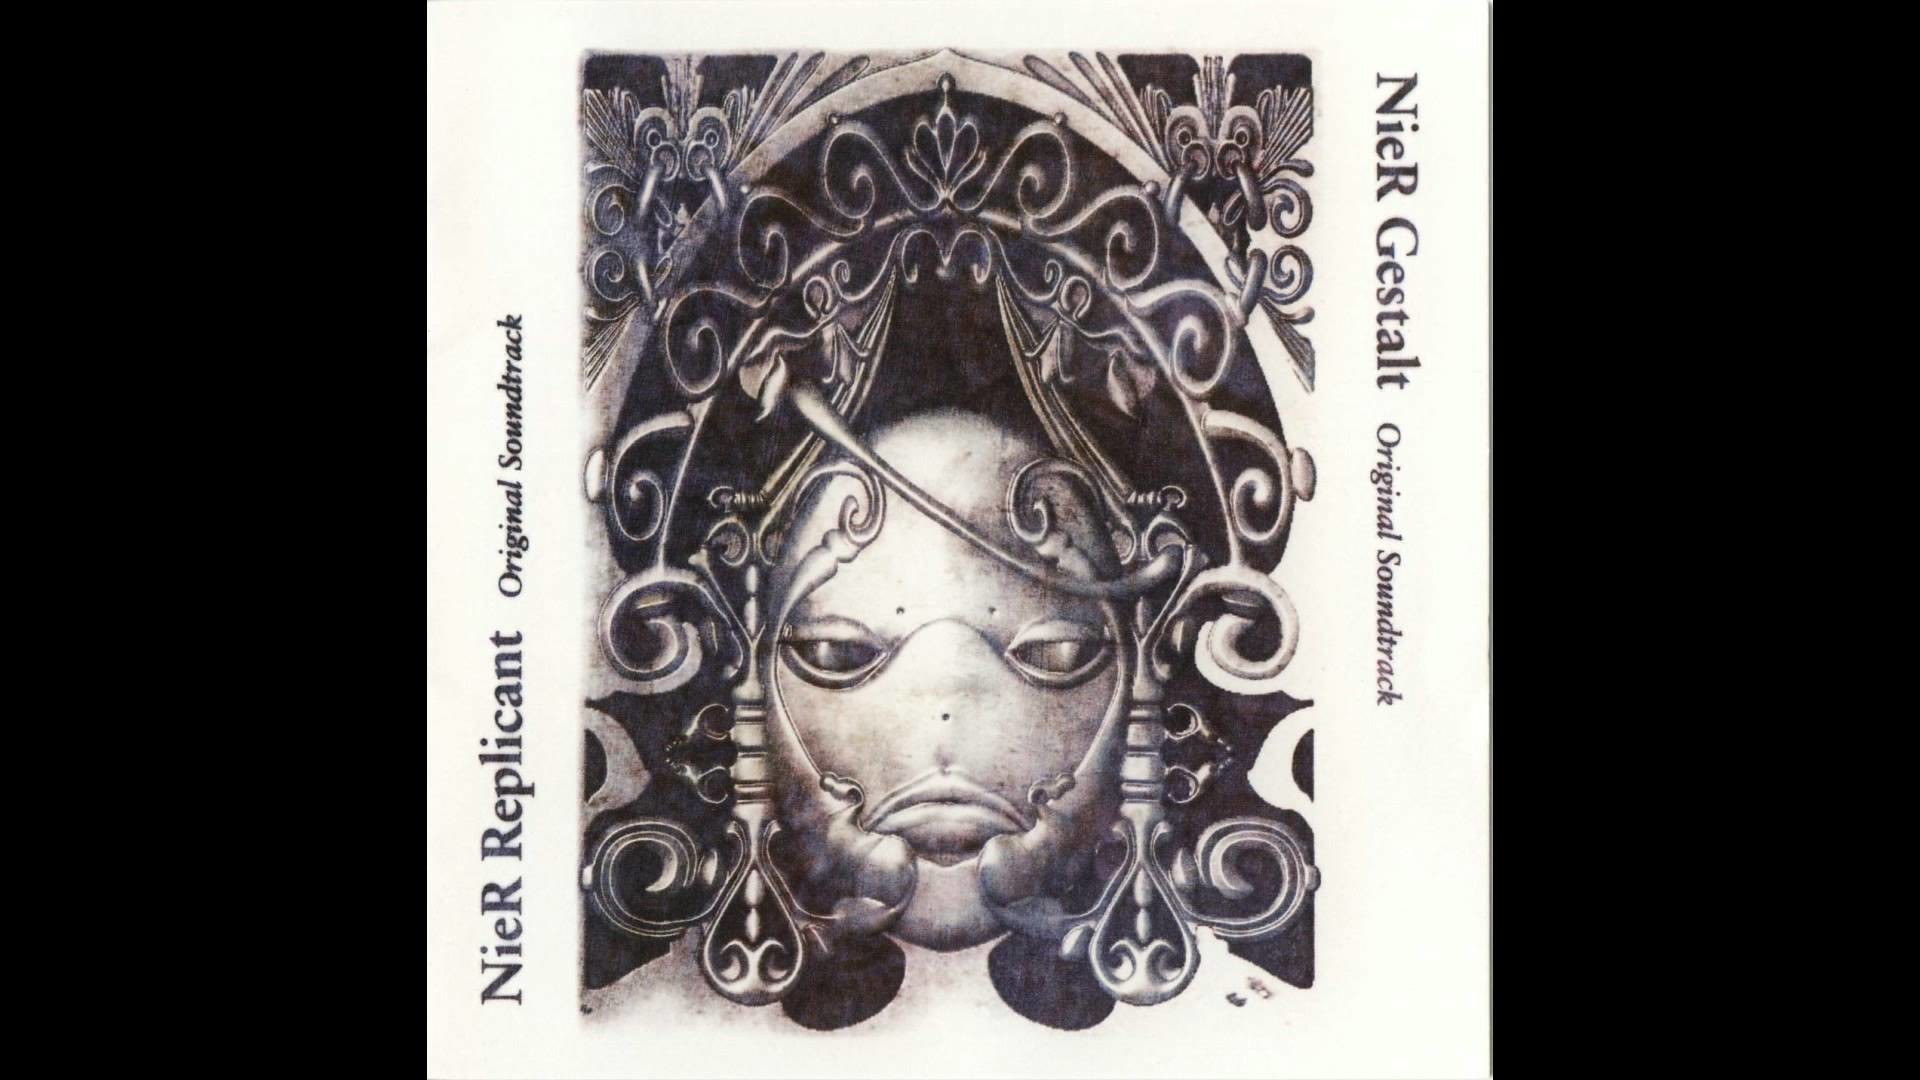 1920x1080 NieR Gestalt & Replicant OST - Shadowlord (White-note Remix)